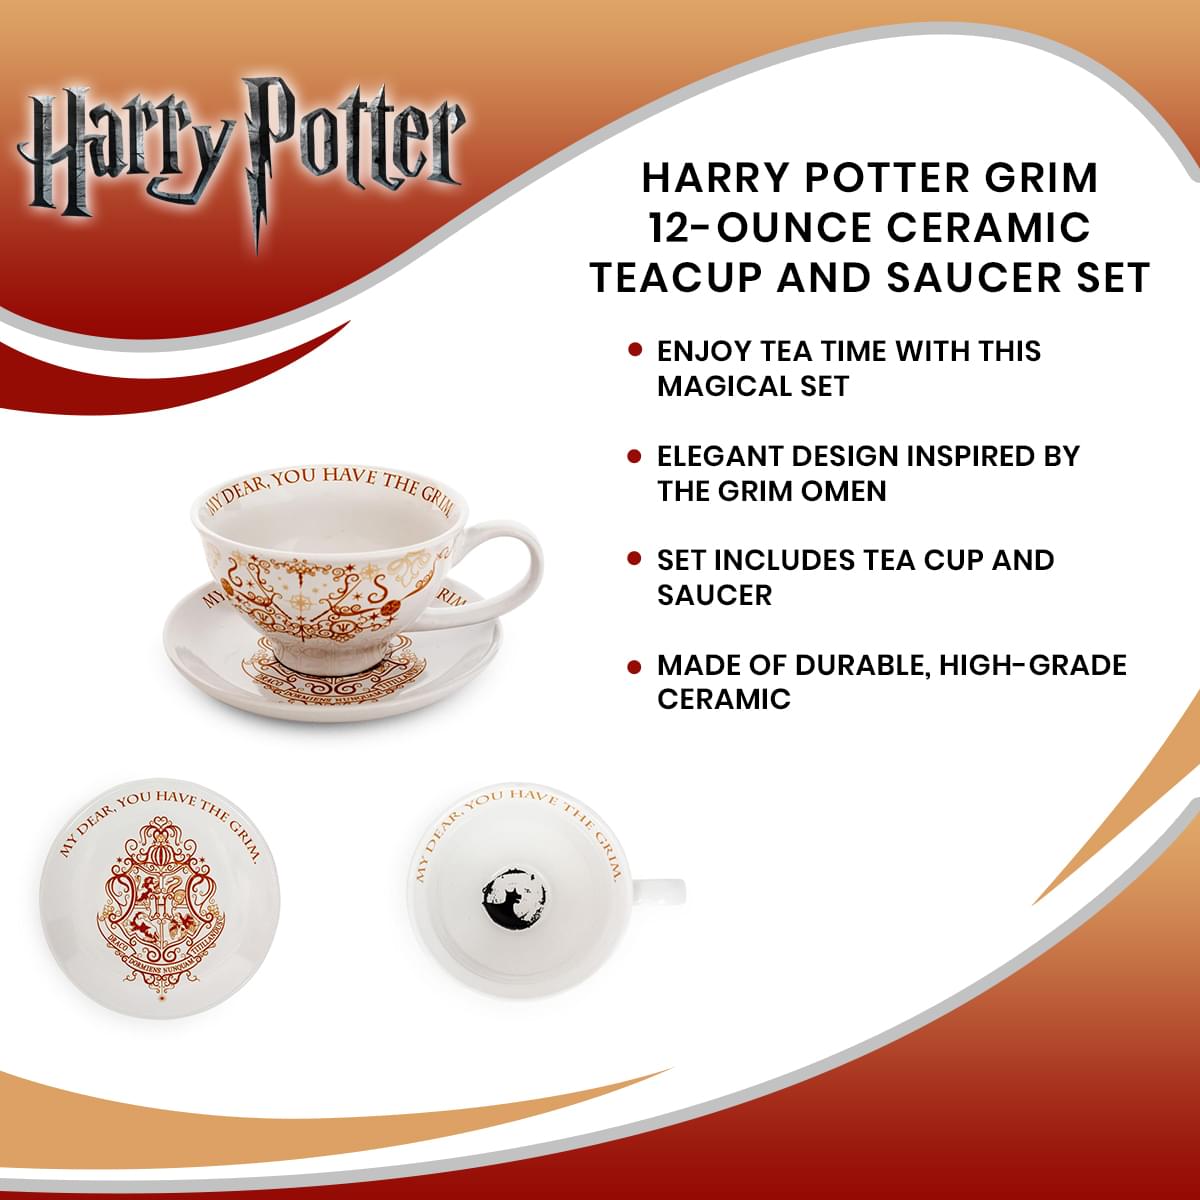 Harry Potter Grim 12-Ounce Ceramic Teacup and Saucer Set